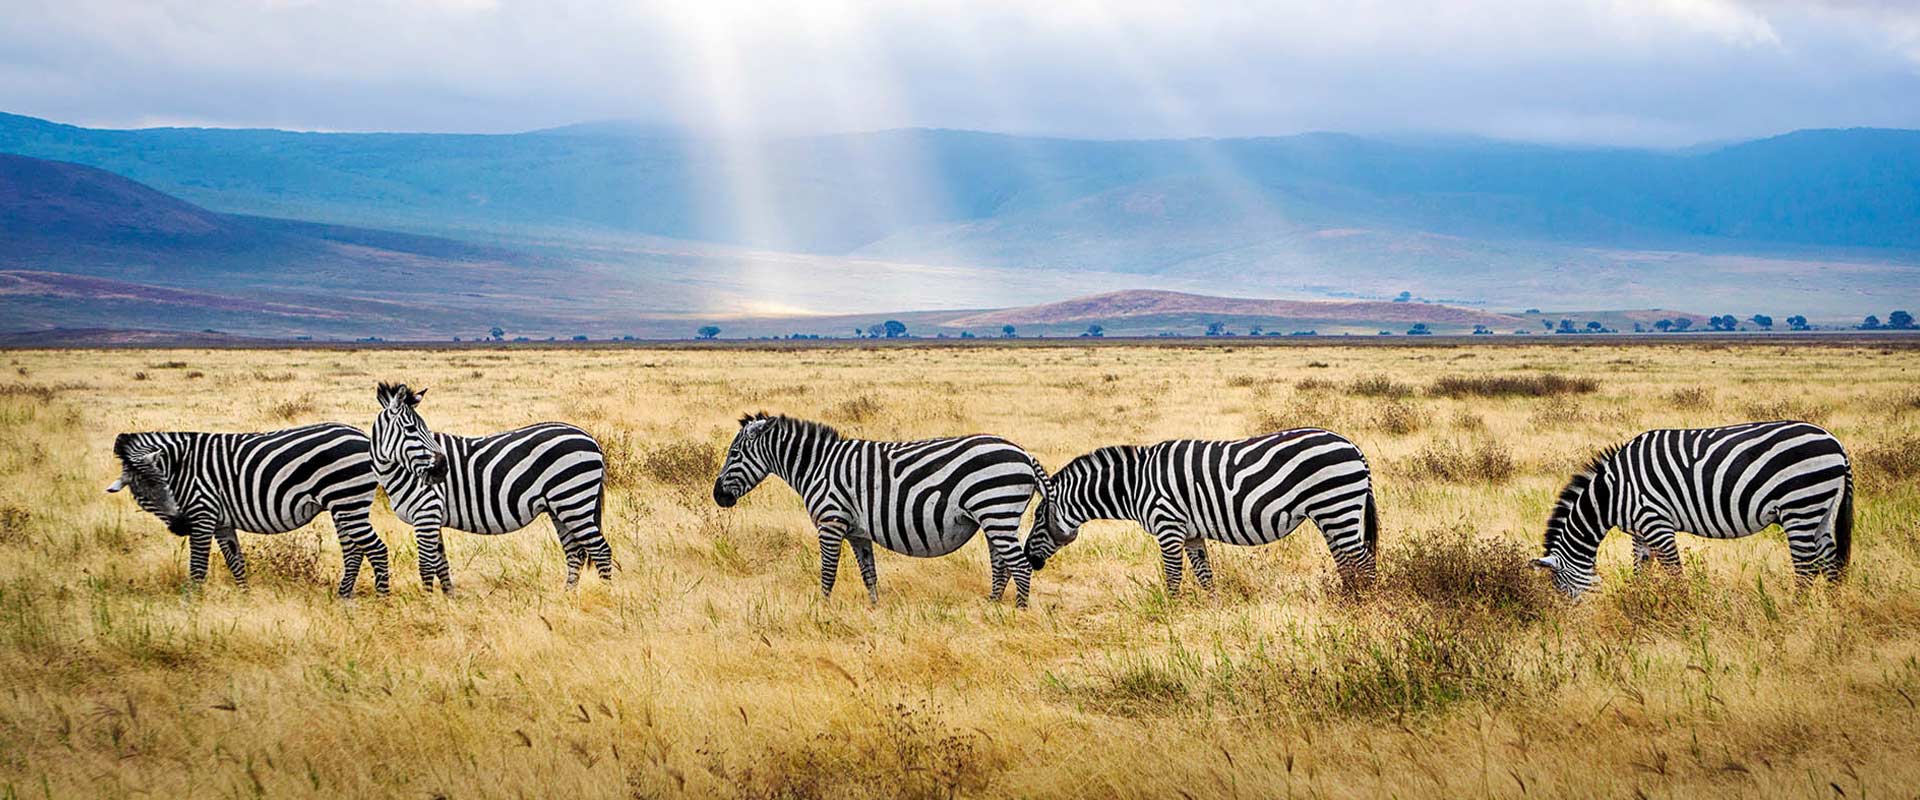 Gallery African Pangolin Safaris 